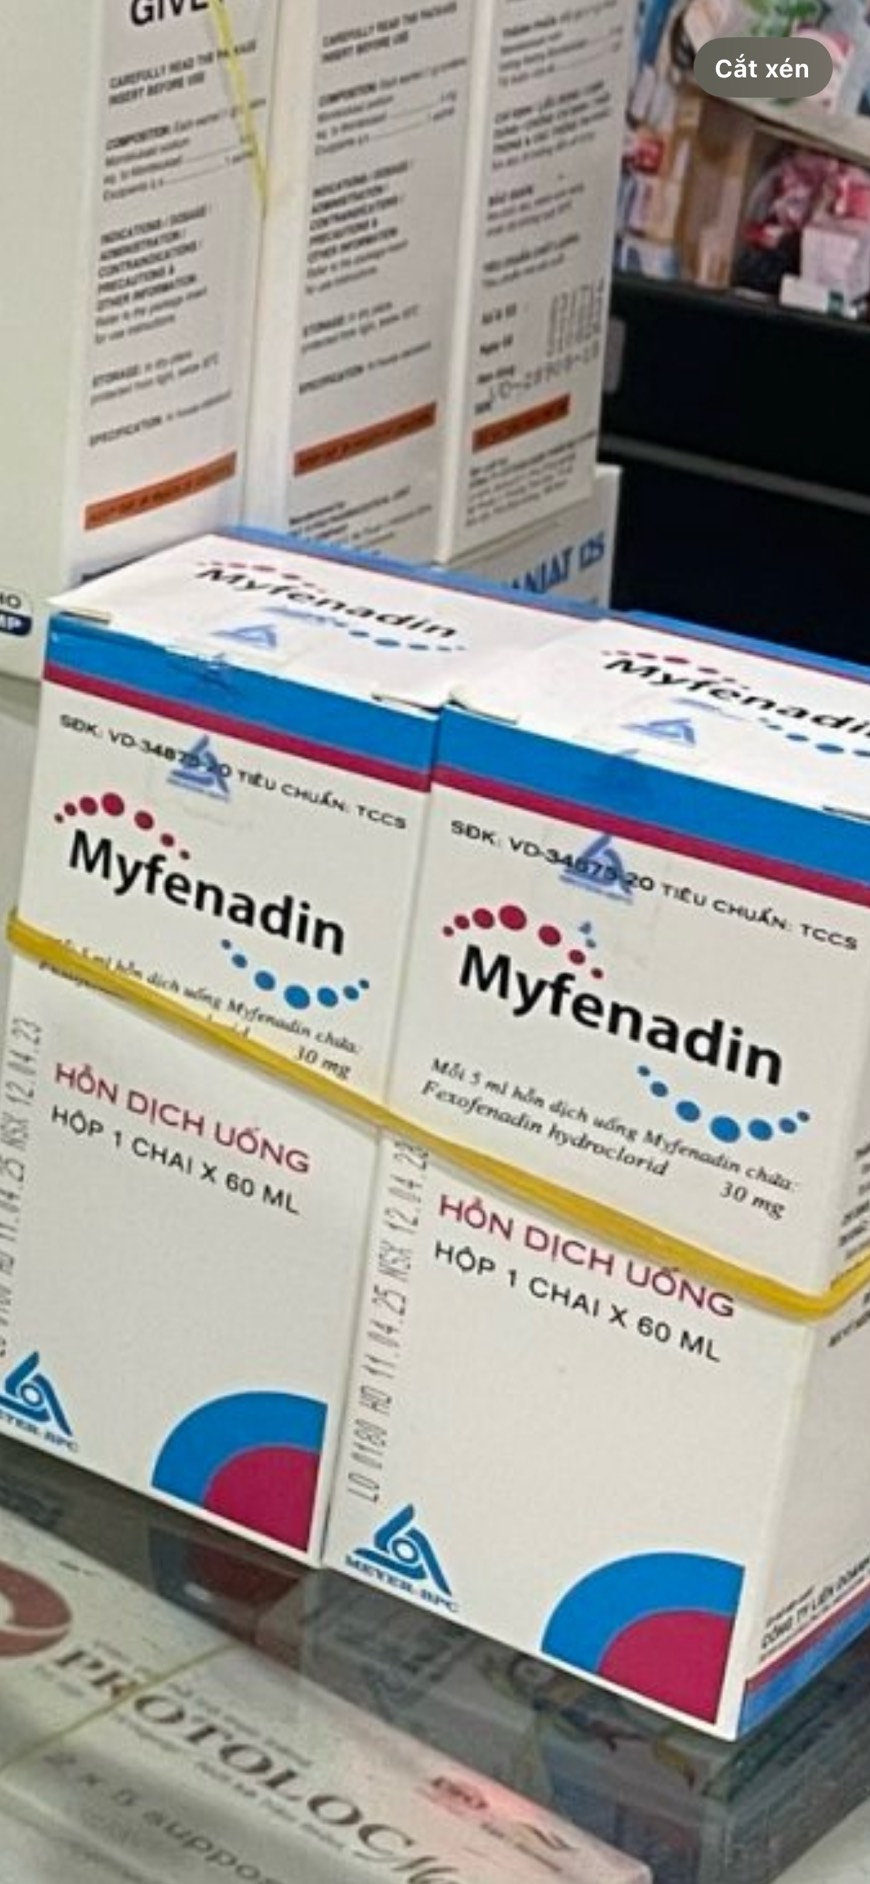 Myfenadin 60ml